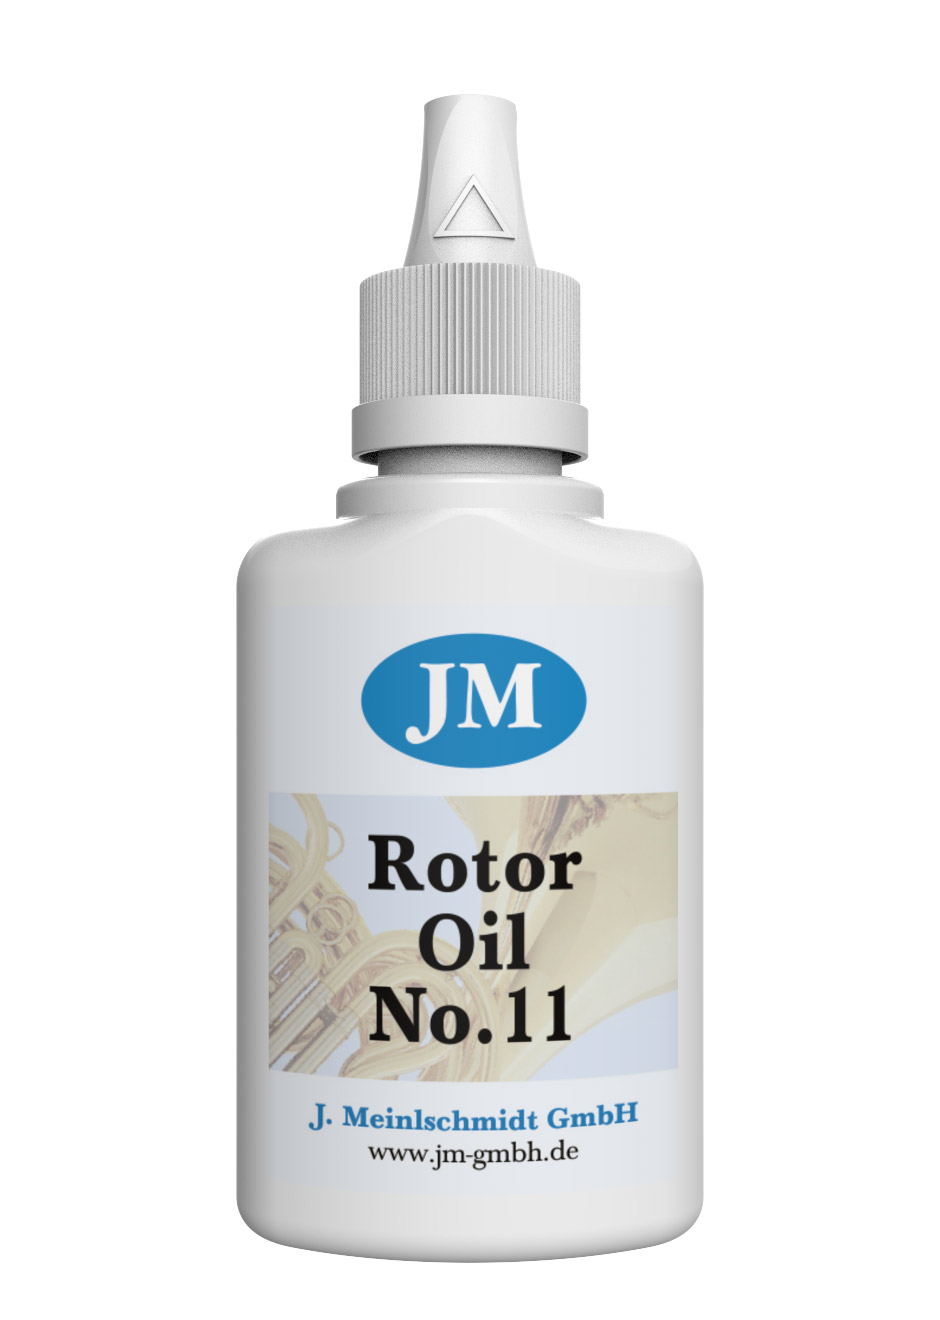 JM Rotor Oil Nr. 11